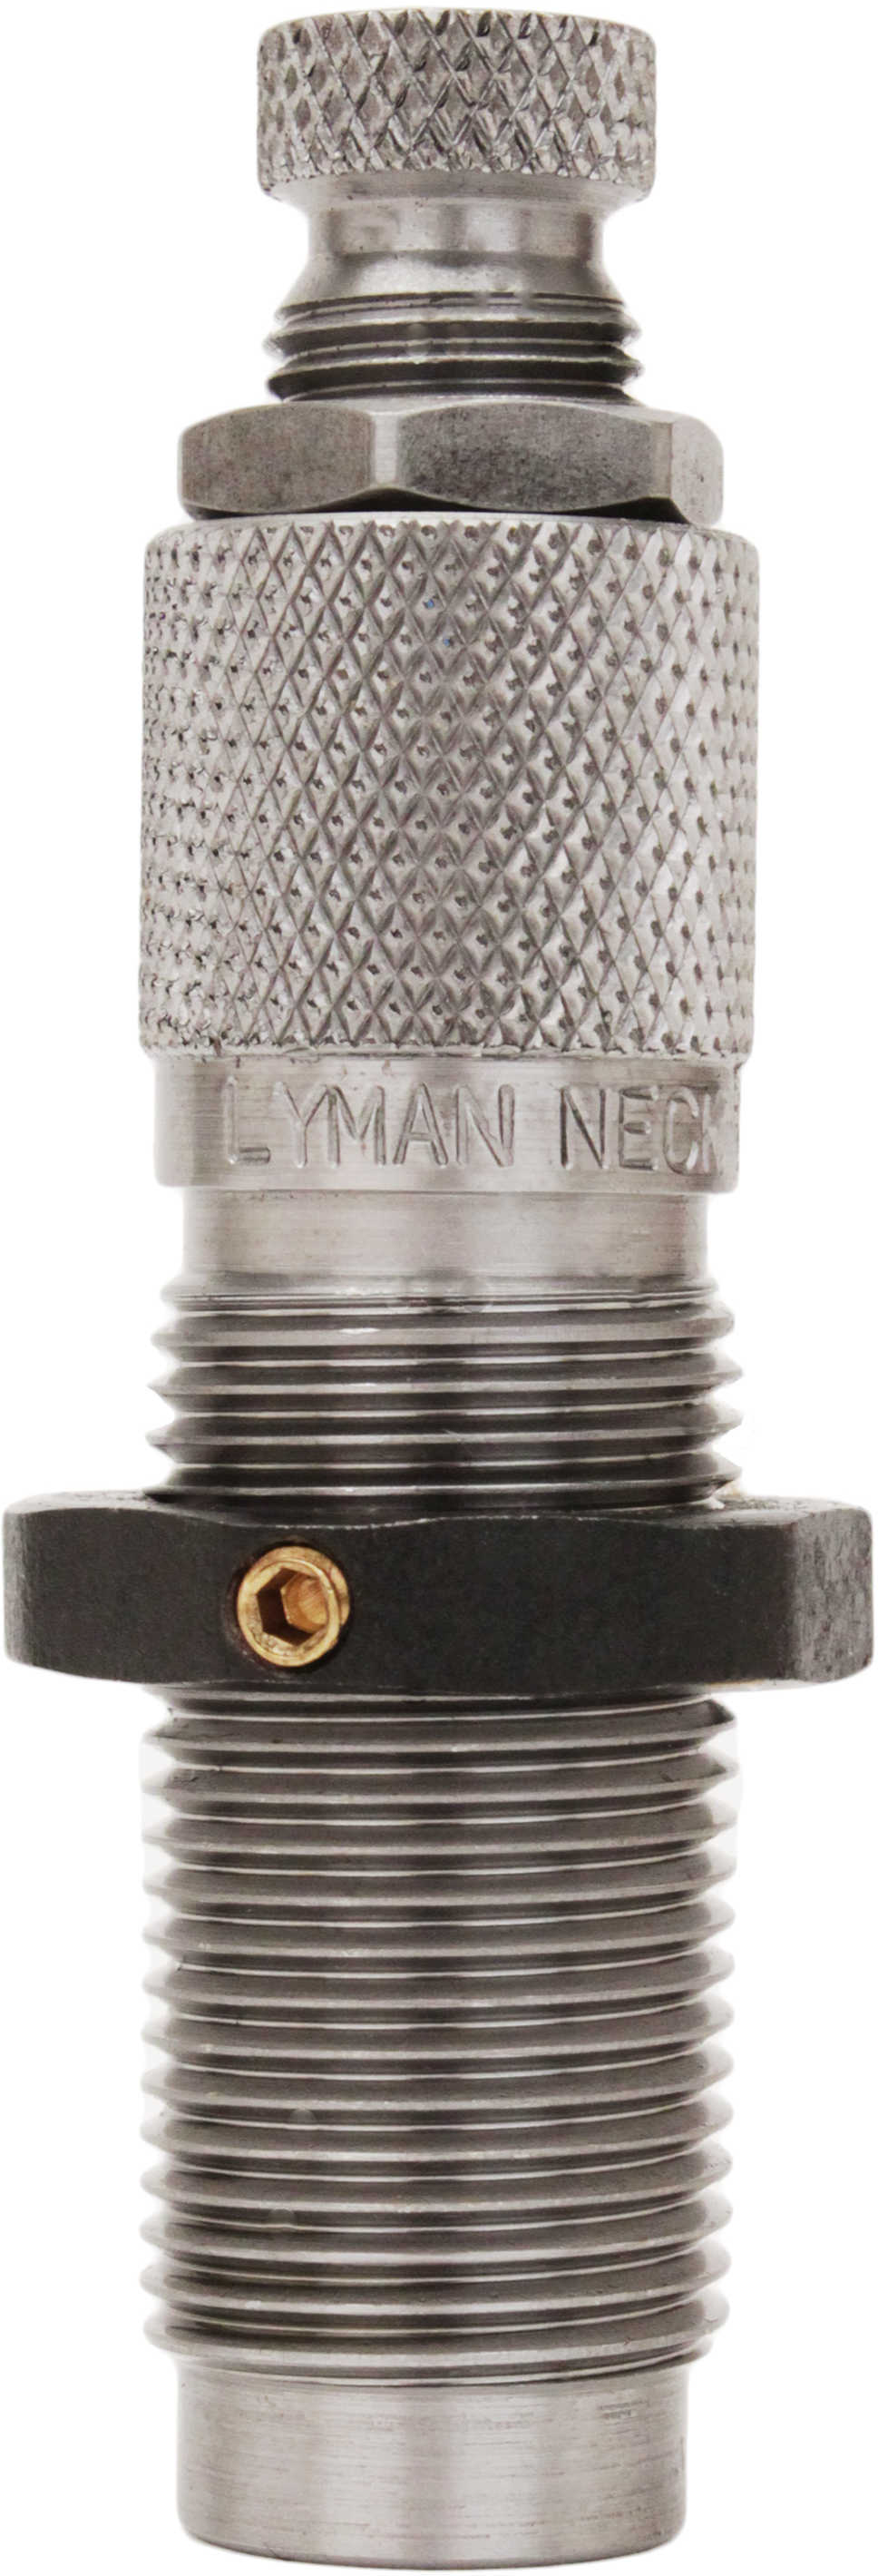 Lyman Handgun Neck Expanding M Die 40 S&W/10mm ACP Md: 7340833